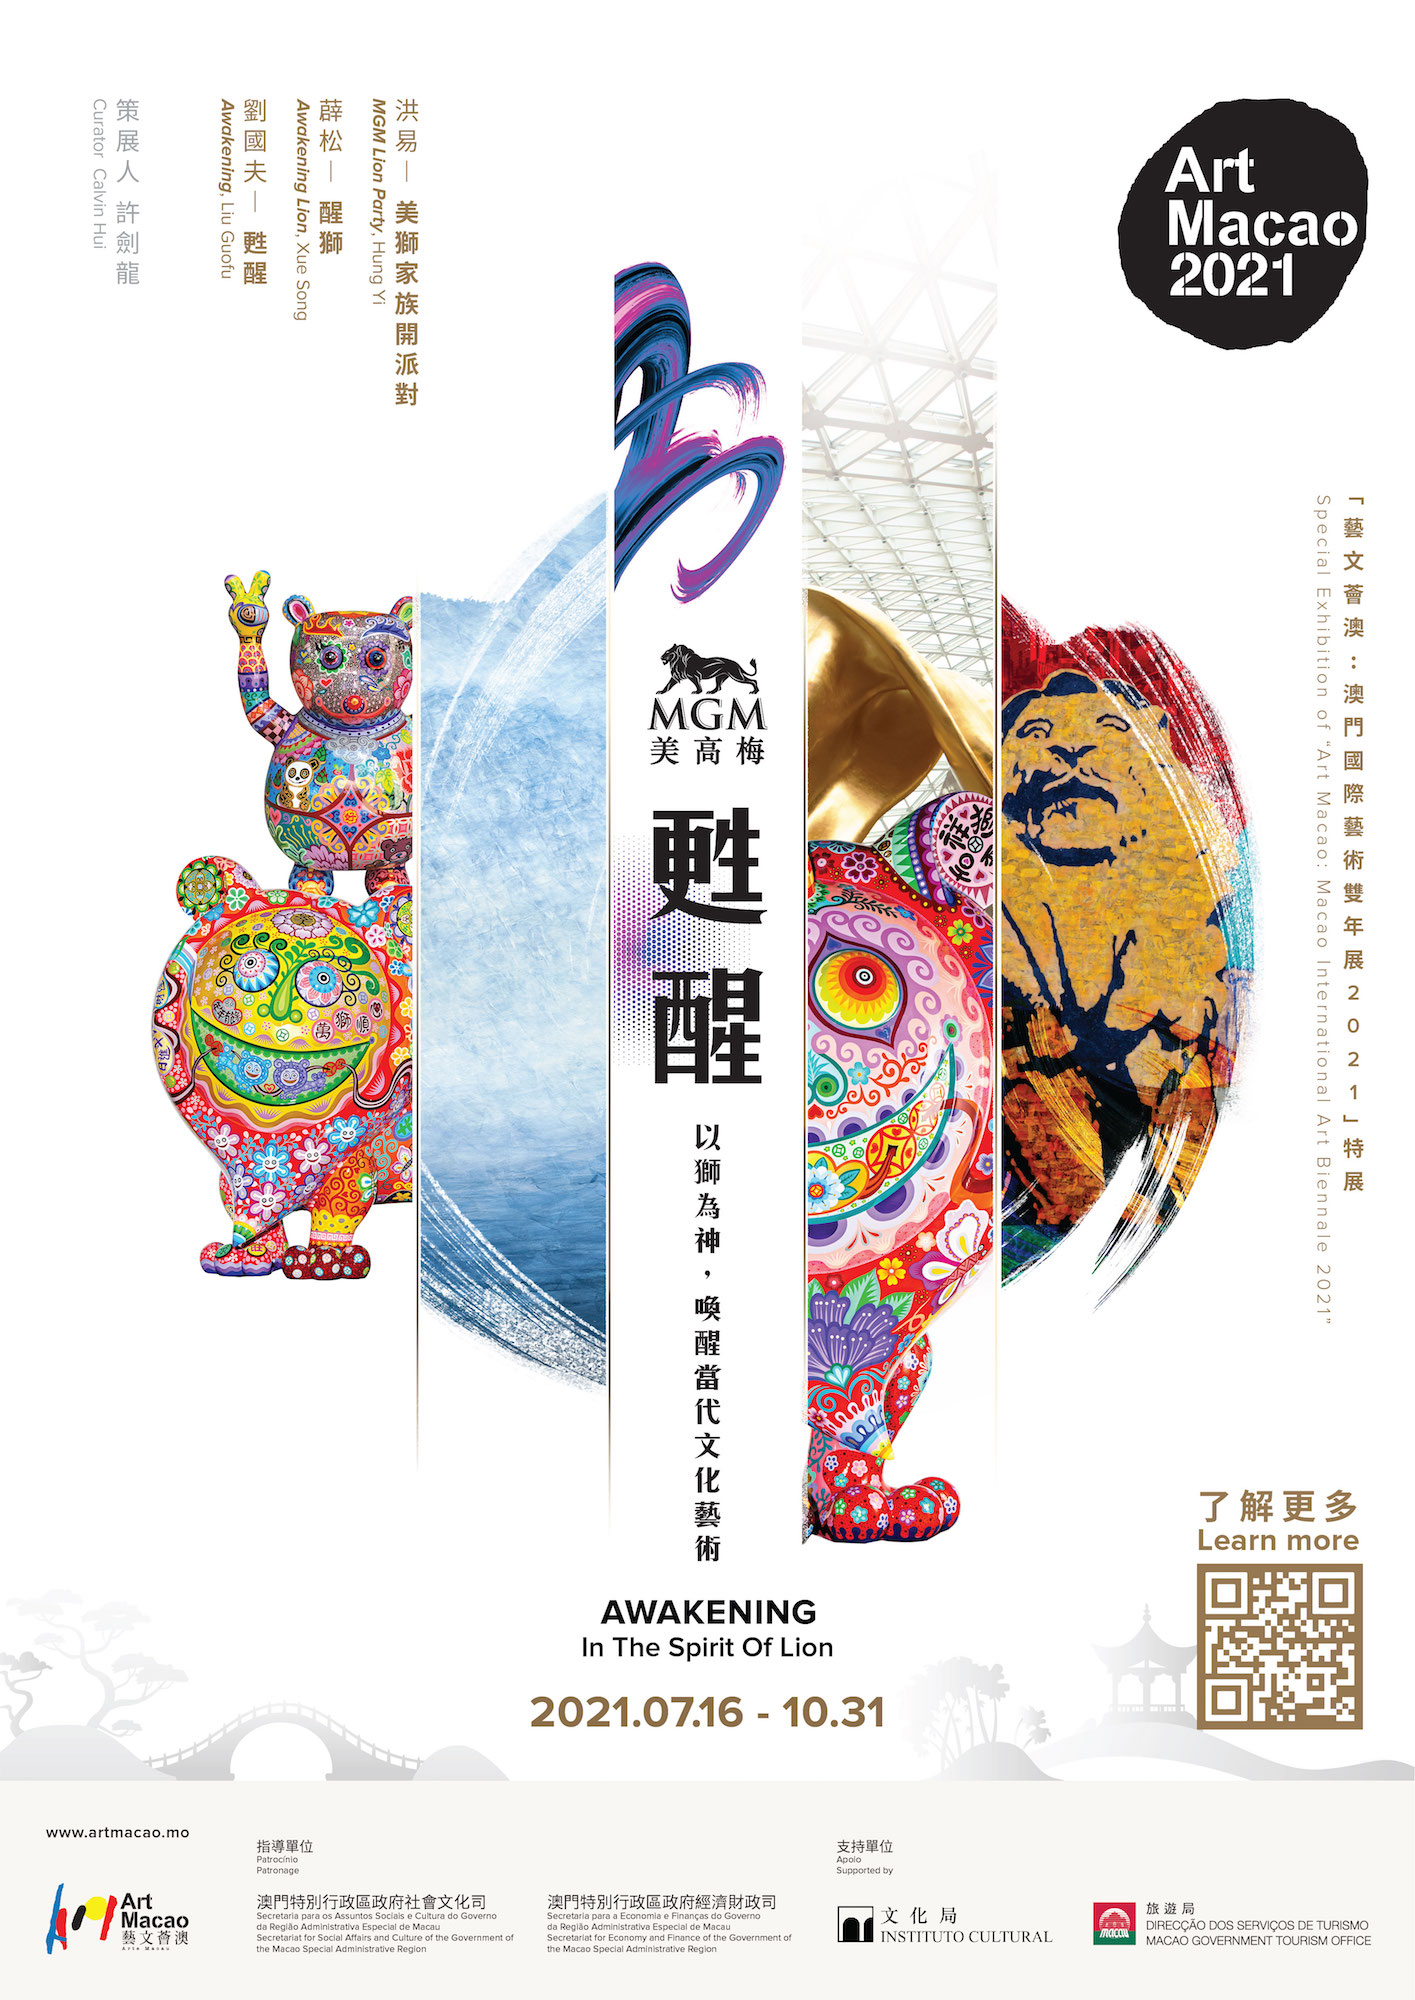 WF-Art Macao 2021- MGM Awakening-KV